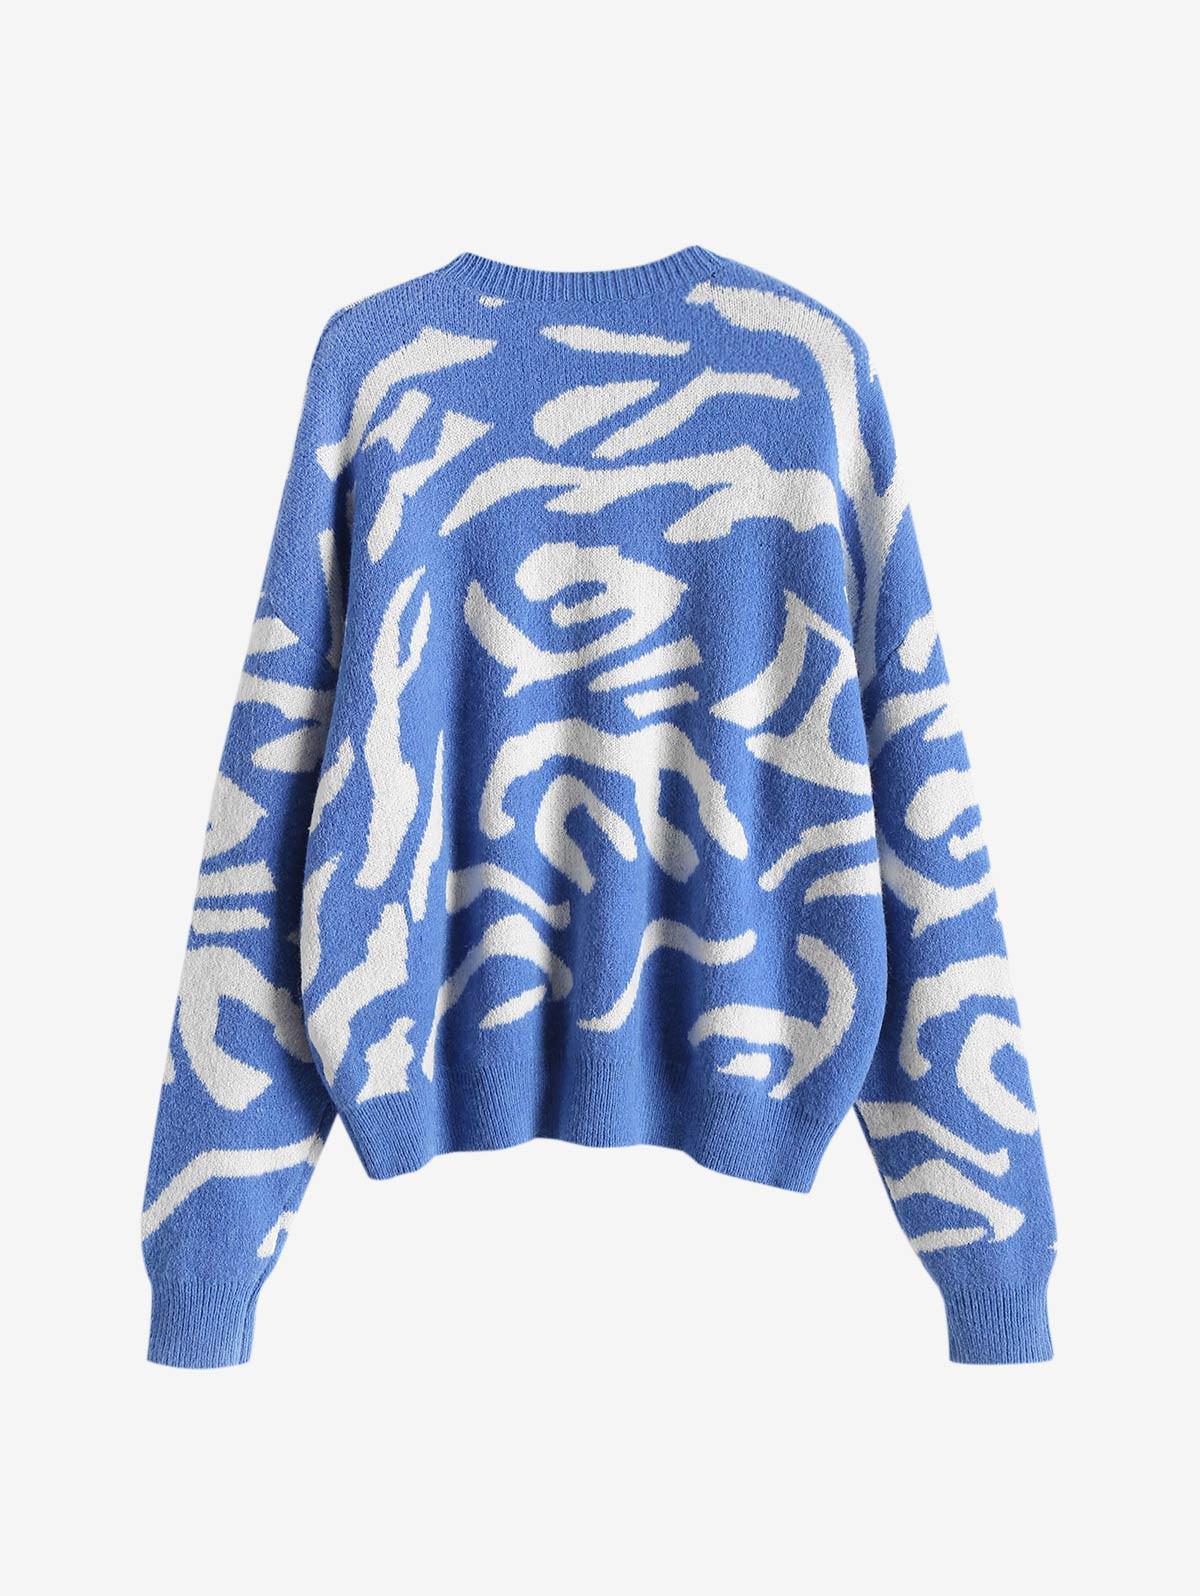 Zaful Leopard Graphic Slouchy Drop Shoulder Sweater in Blue | Lyst